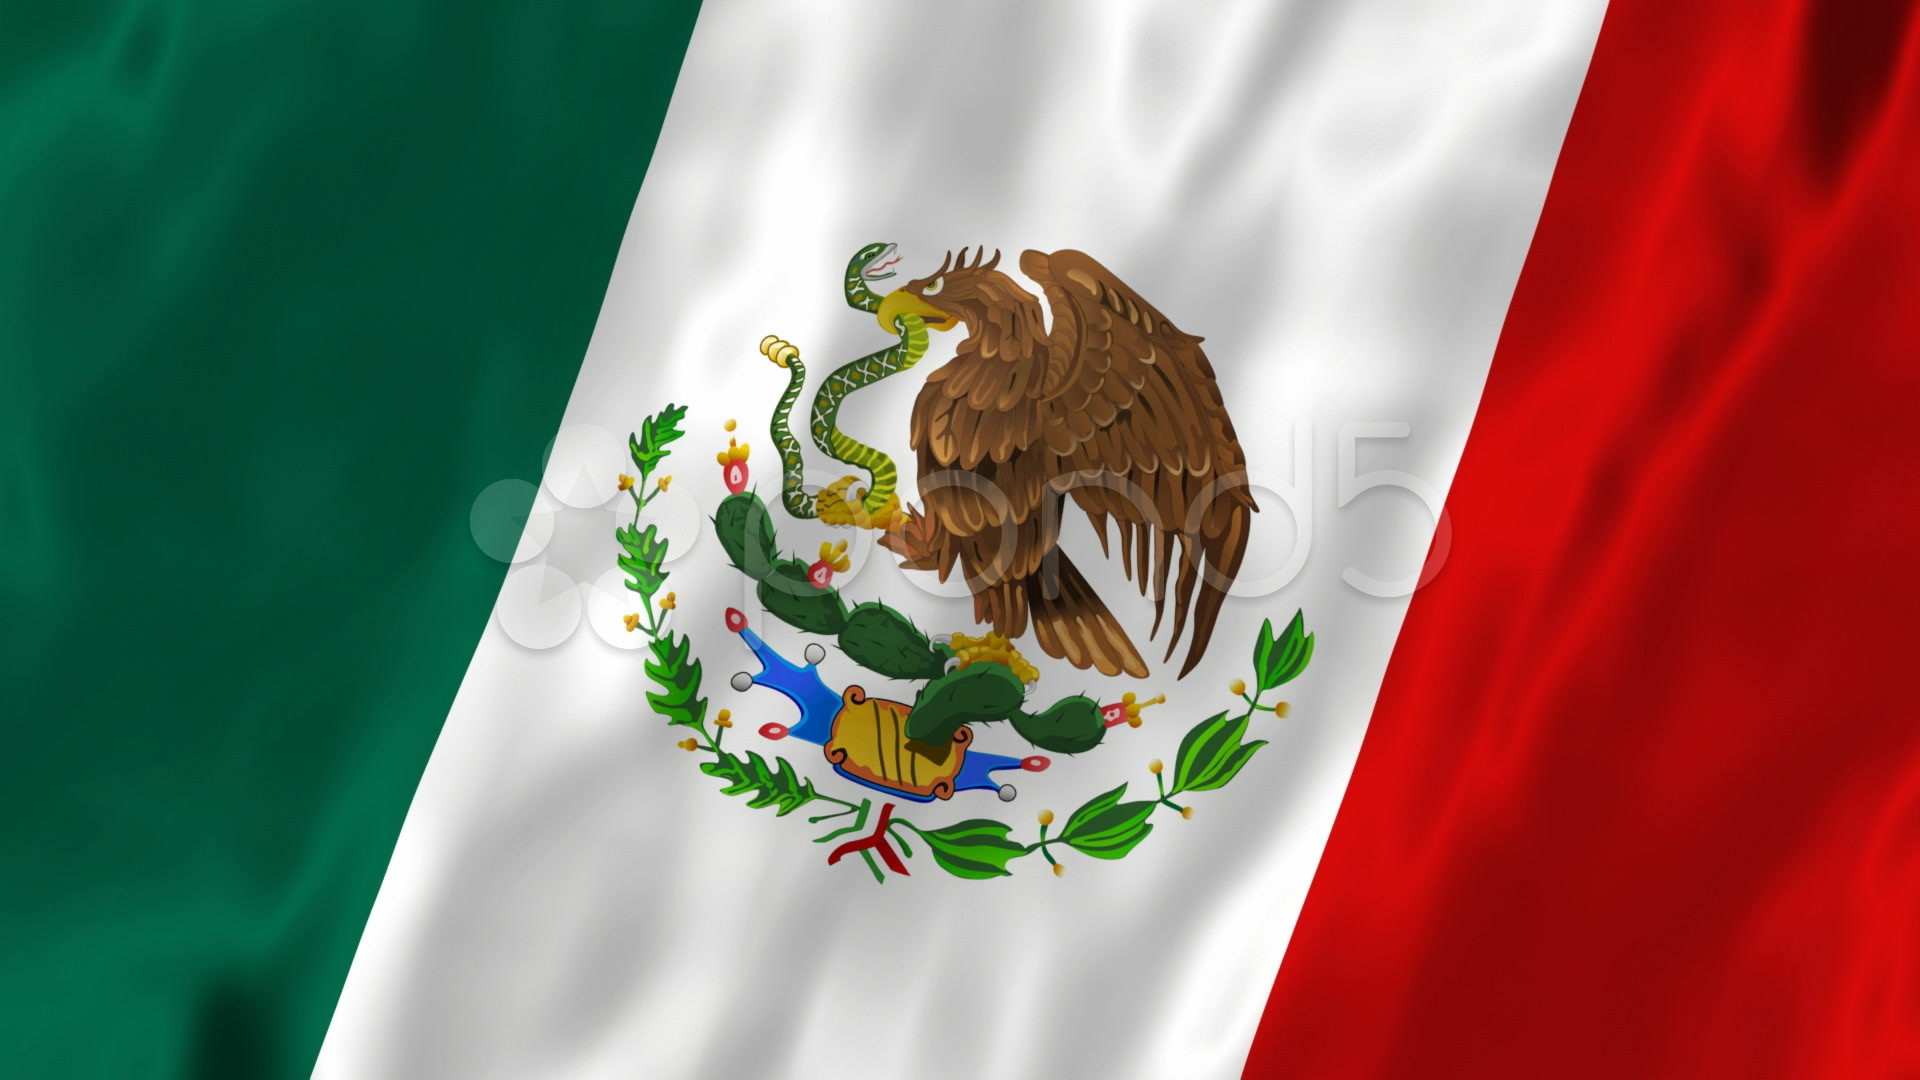 14821 Bandera Mexico Usa Images Stock Photos  Vectors  Shutterstock